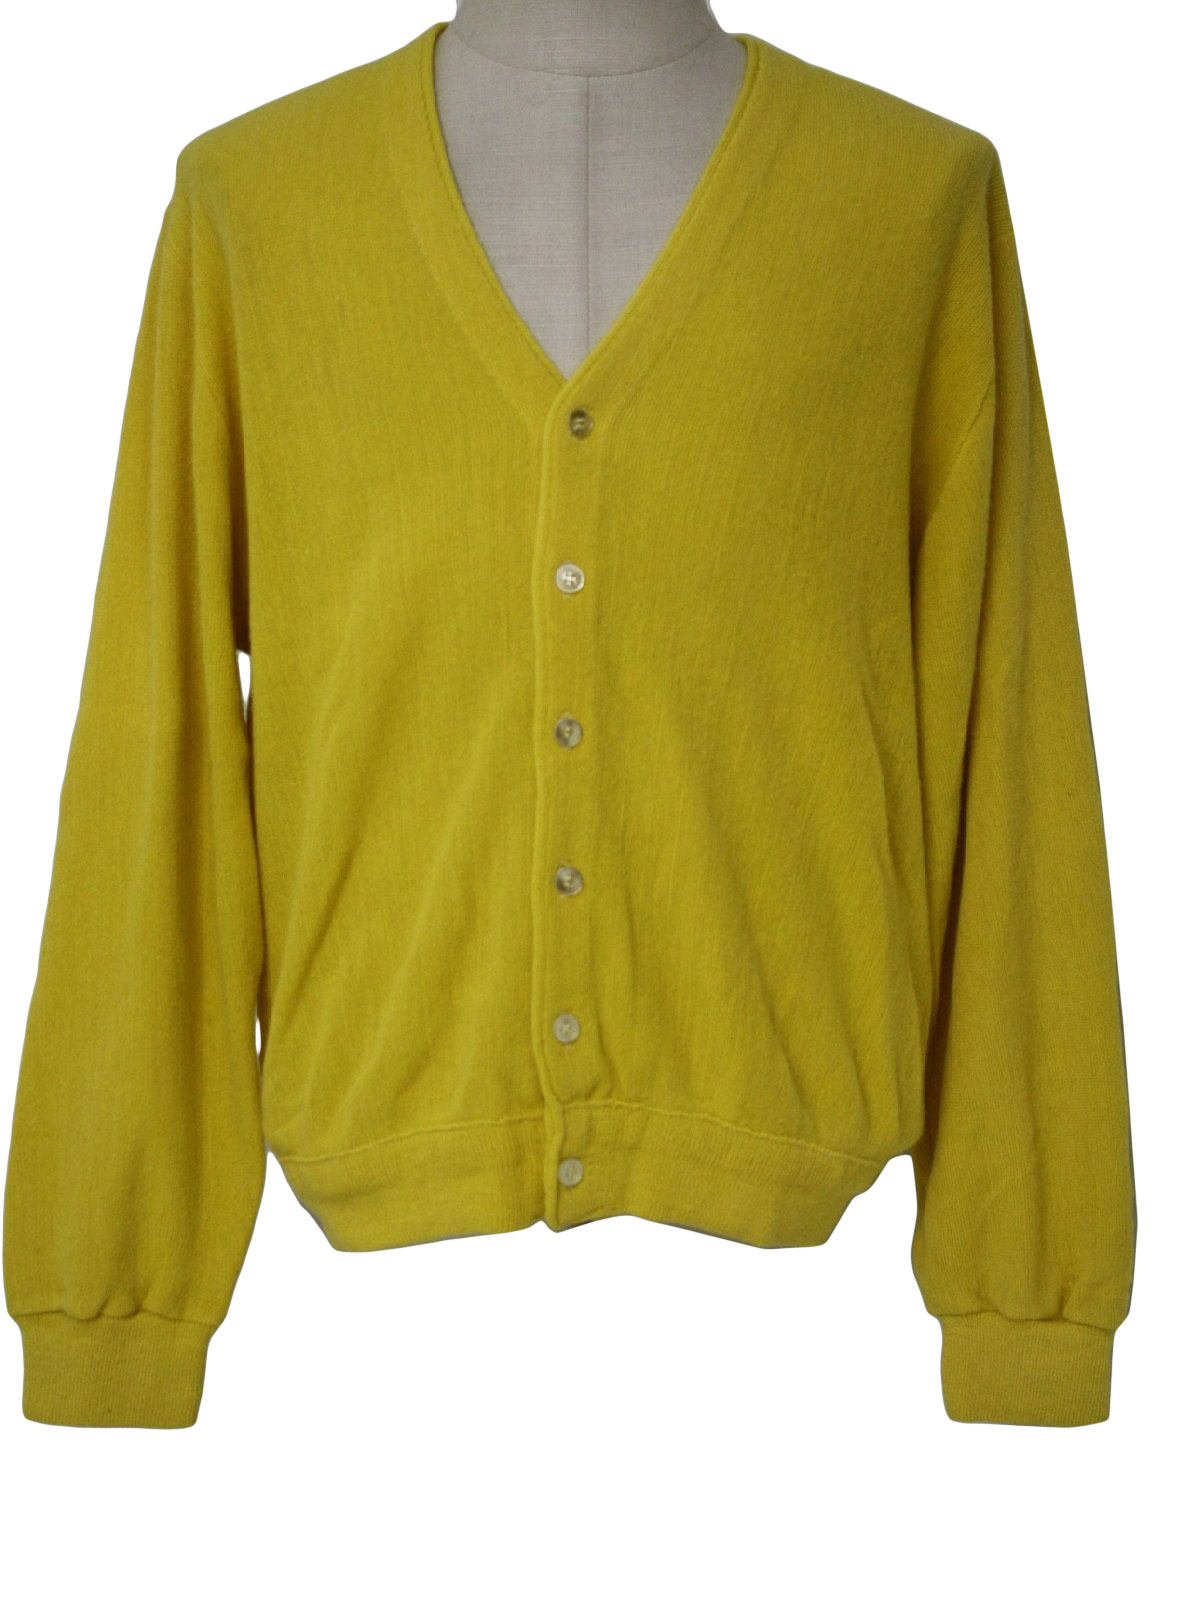 Retro 1970's Caridgan Sweater (Halifax Knitters) : 70s -Halifax ...